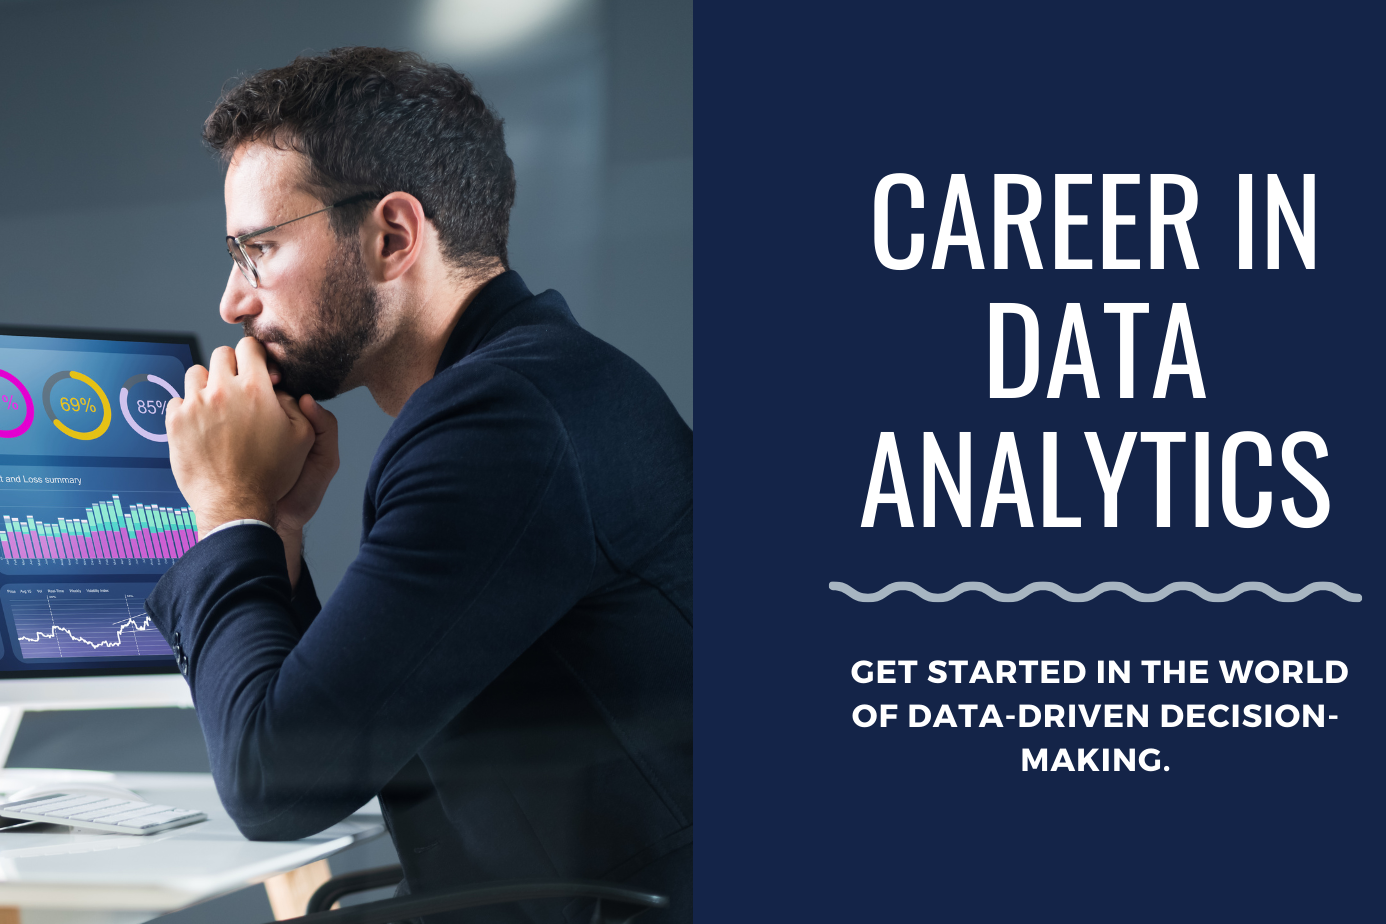 Career In Data Analytics